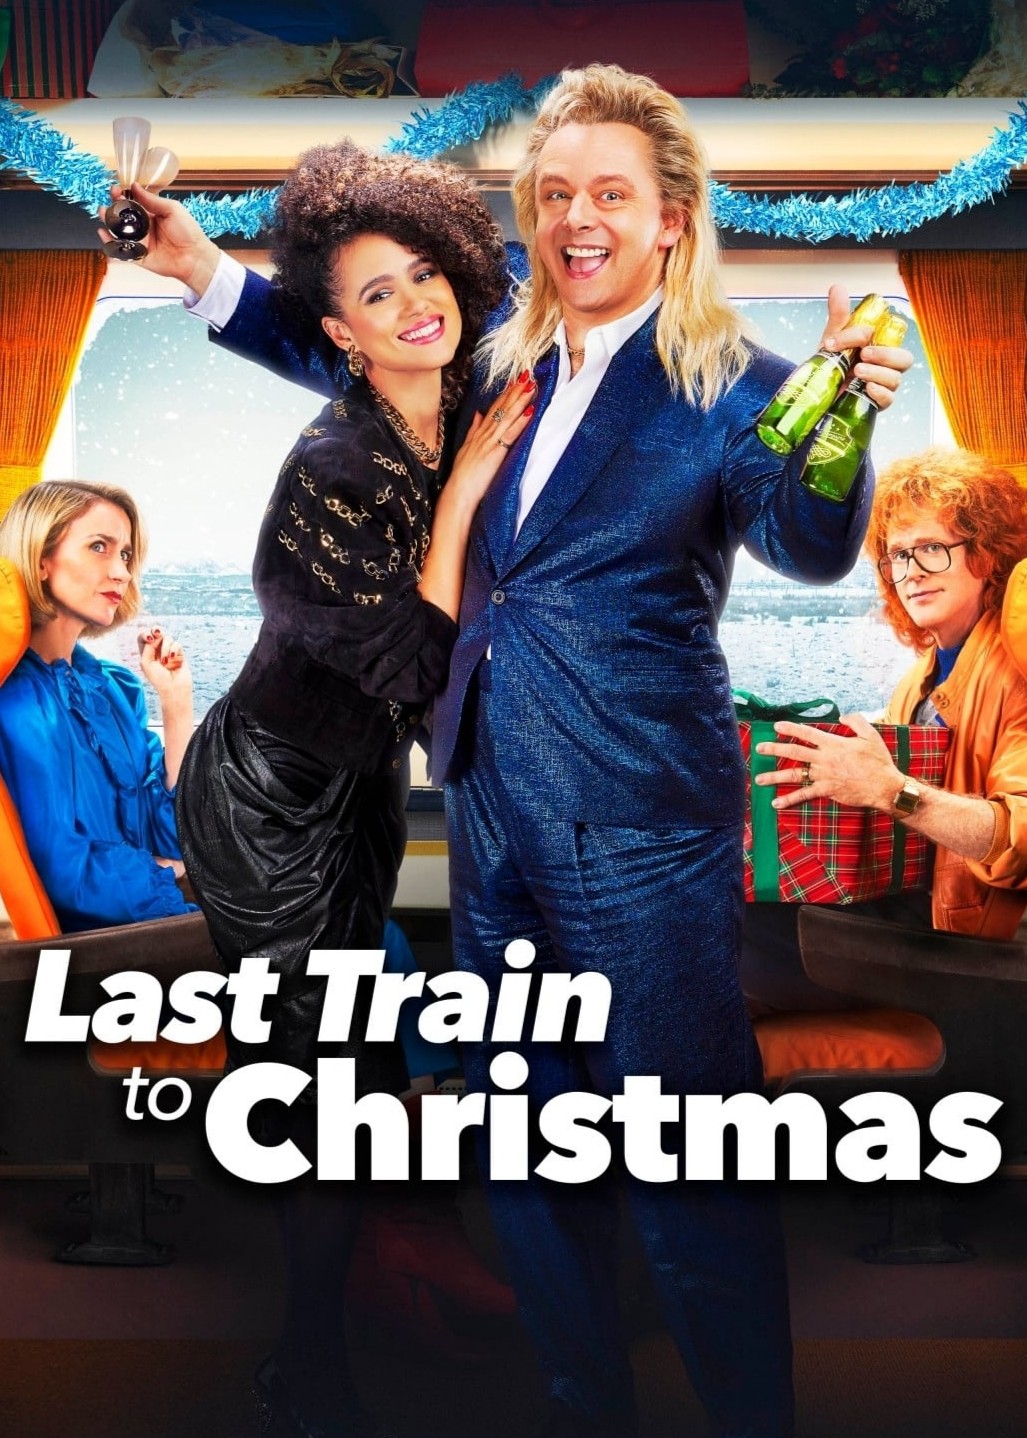 Last Train to Christmas 2021